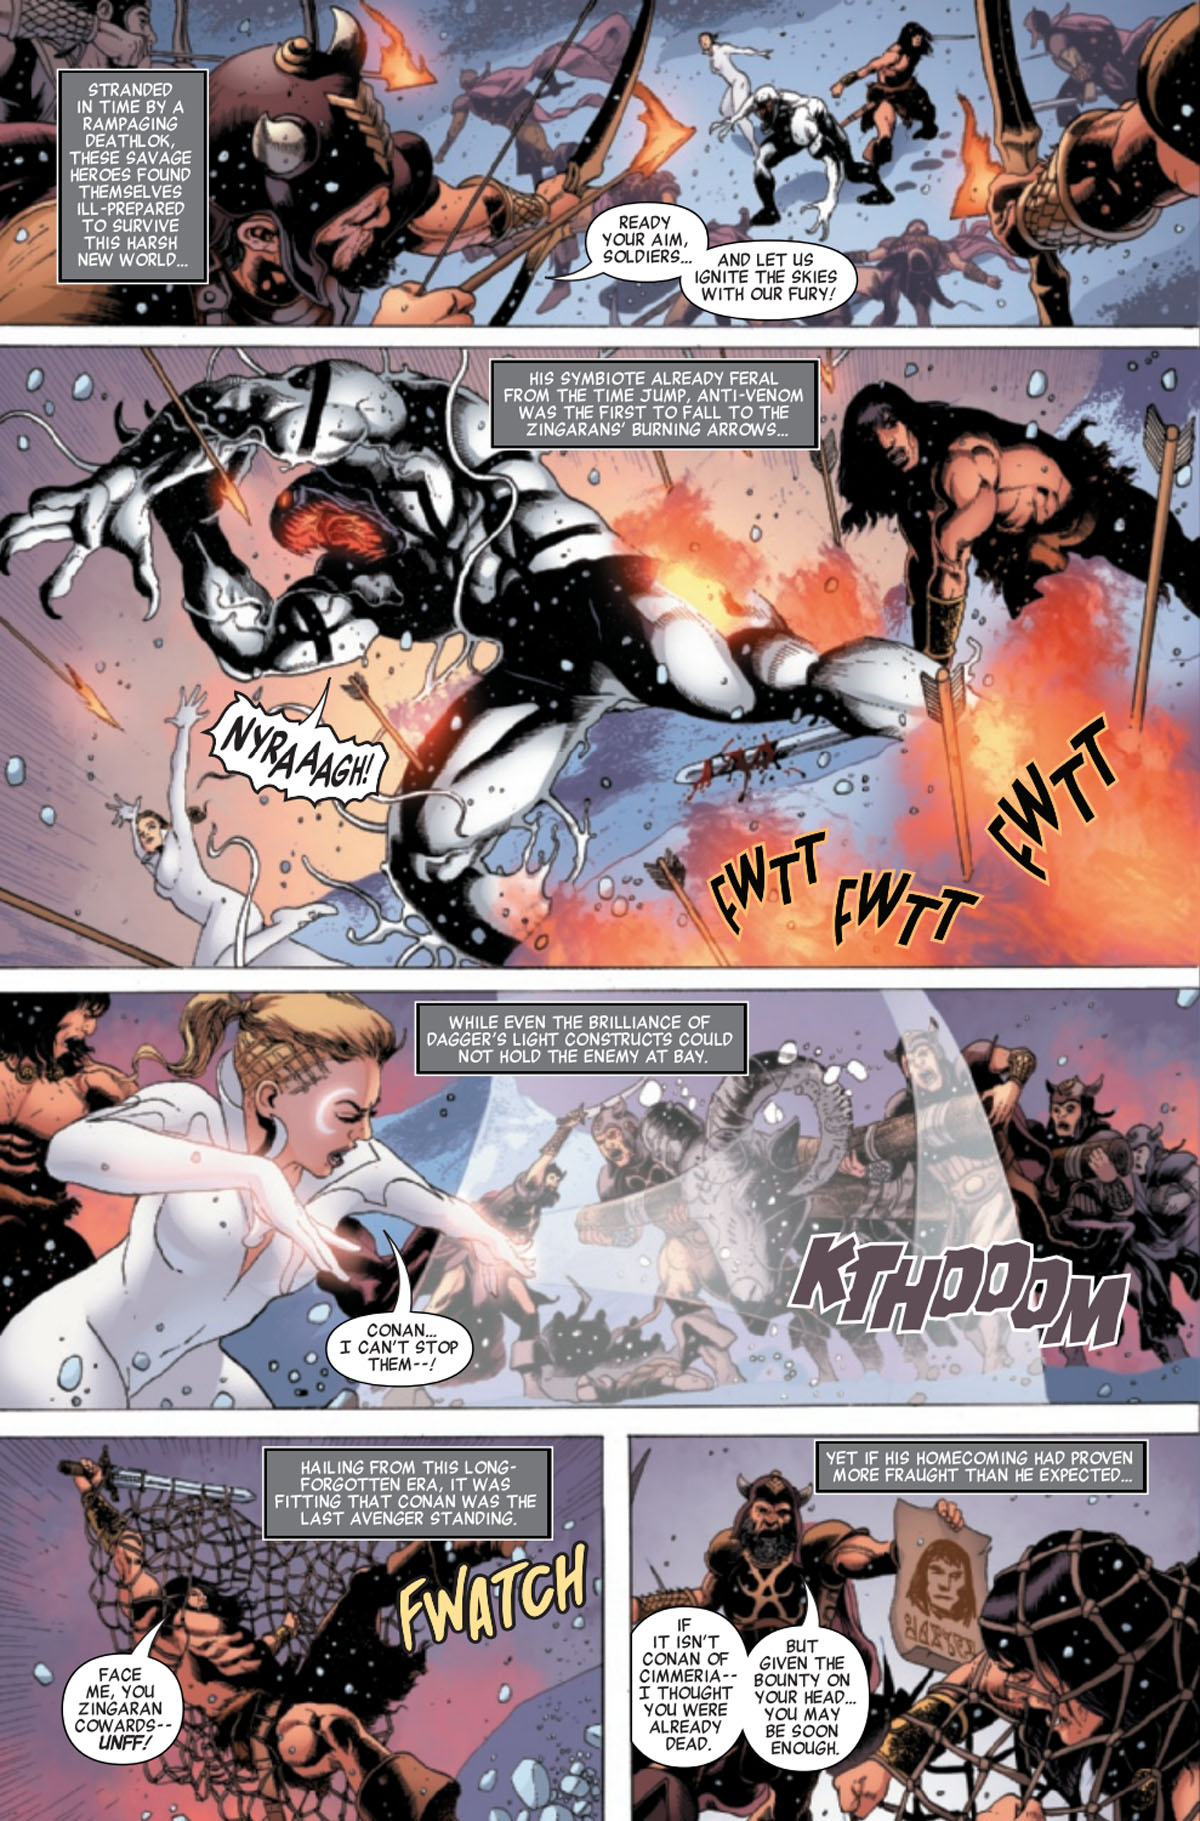 Savage Avengers #2 page 3